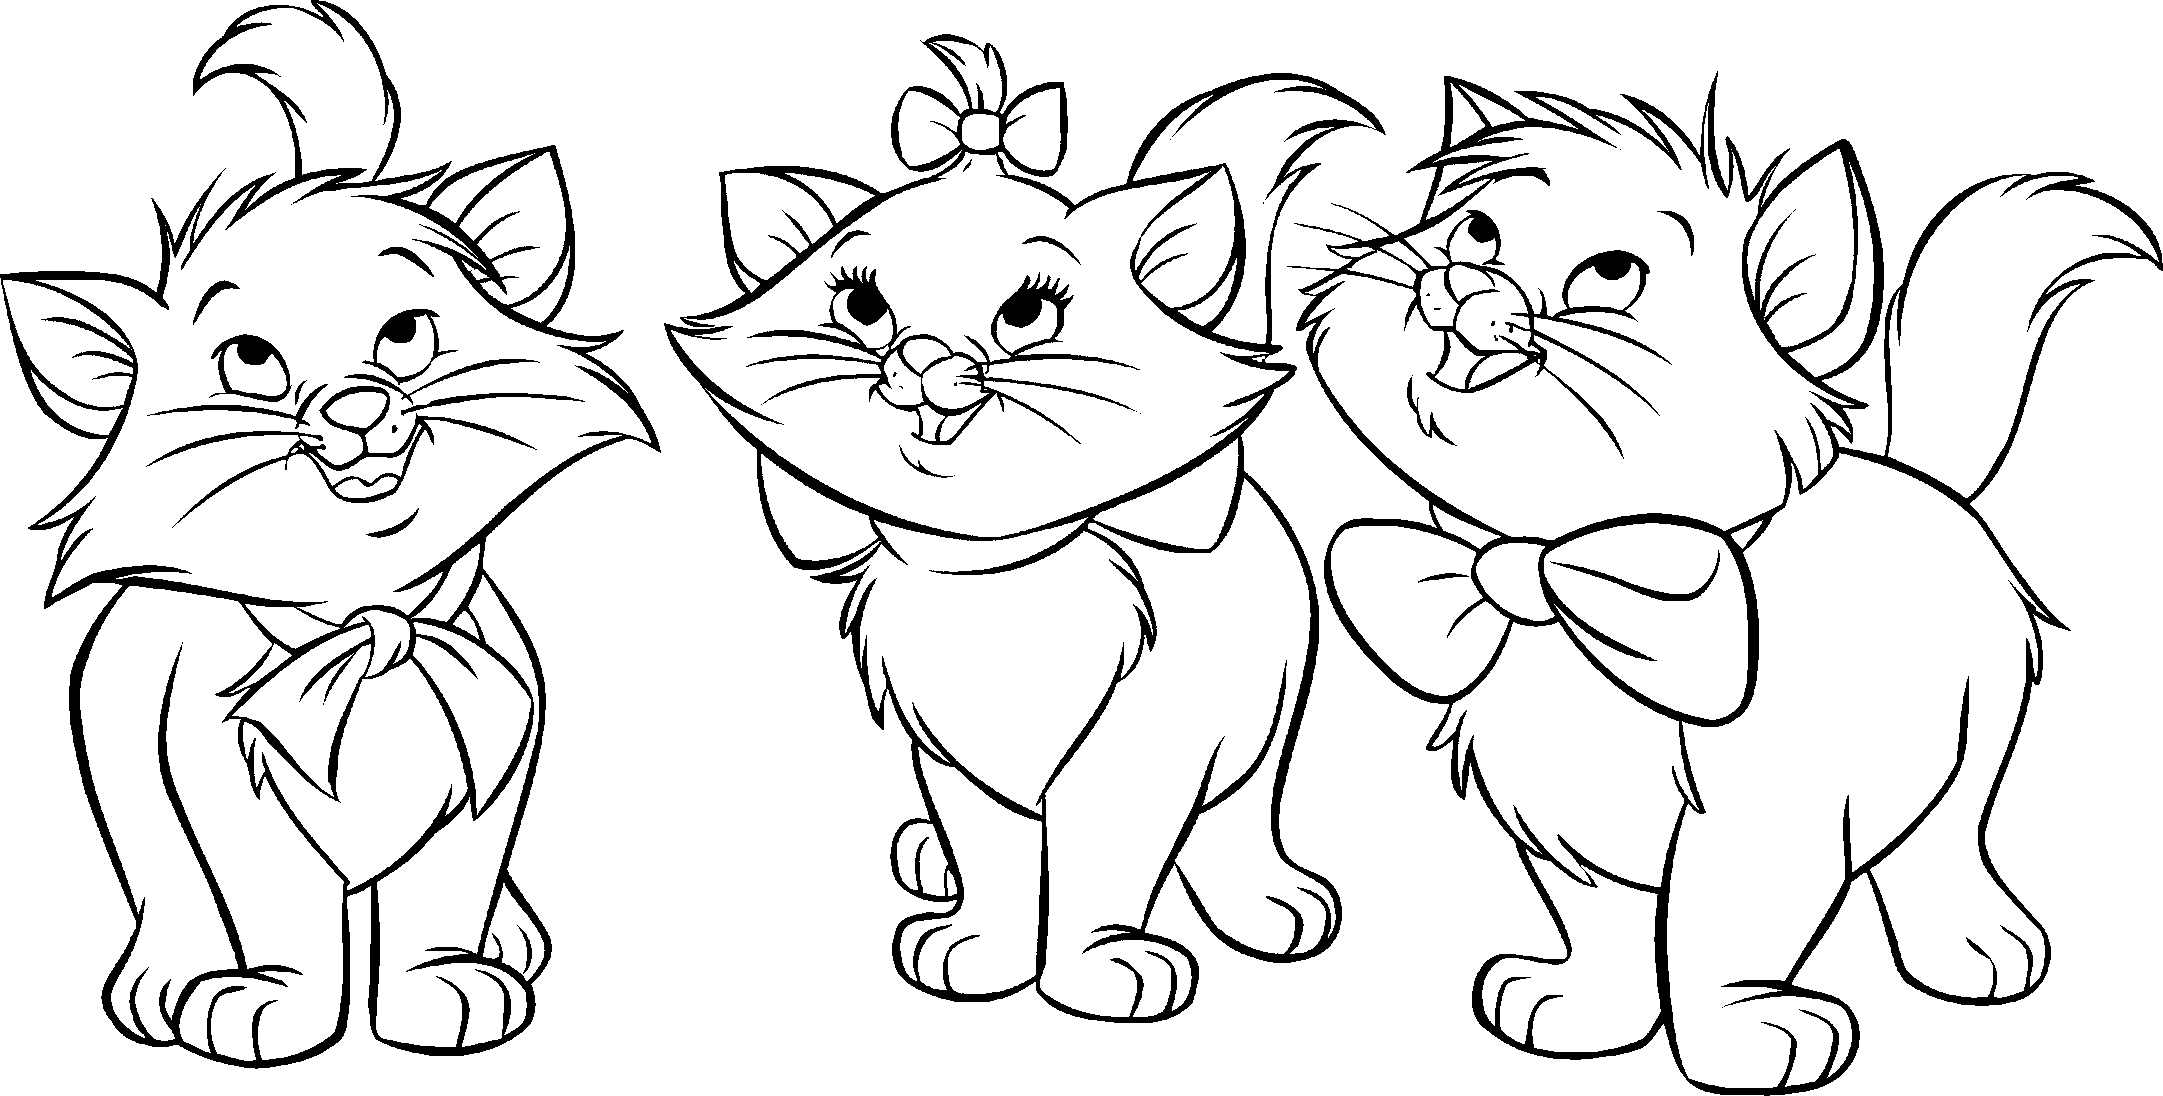 Irmaos gatinhos de aristogatas